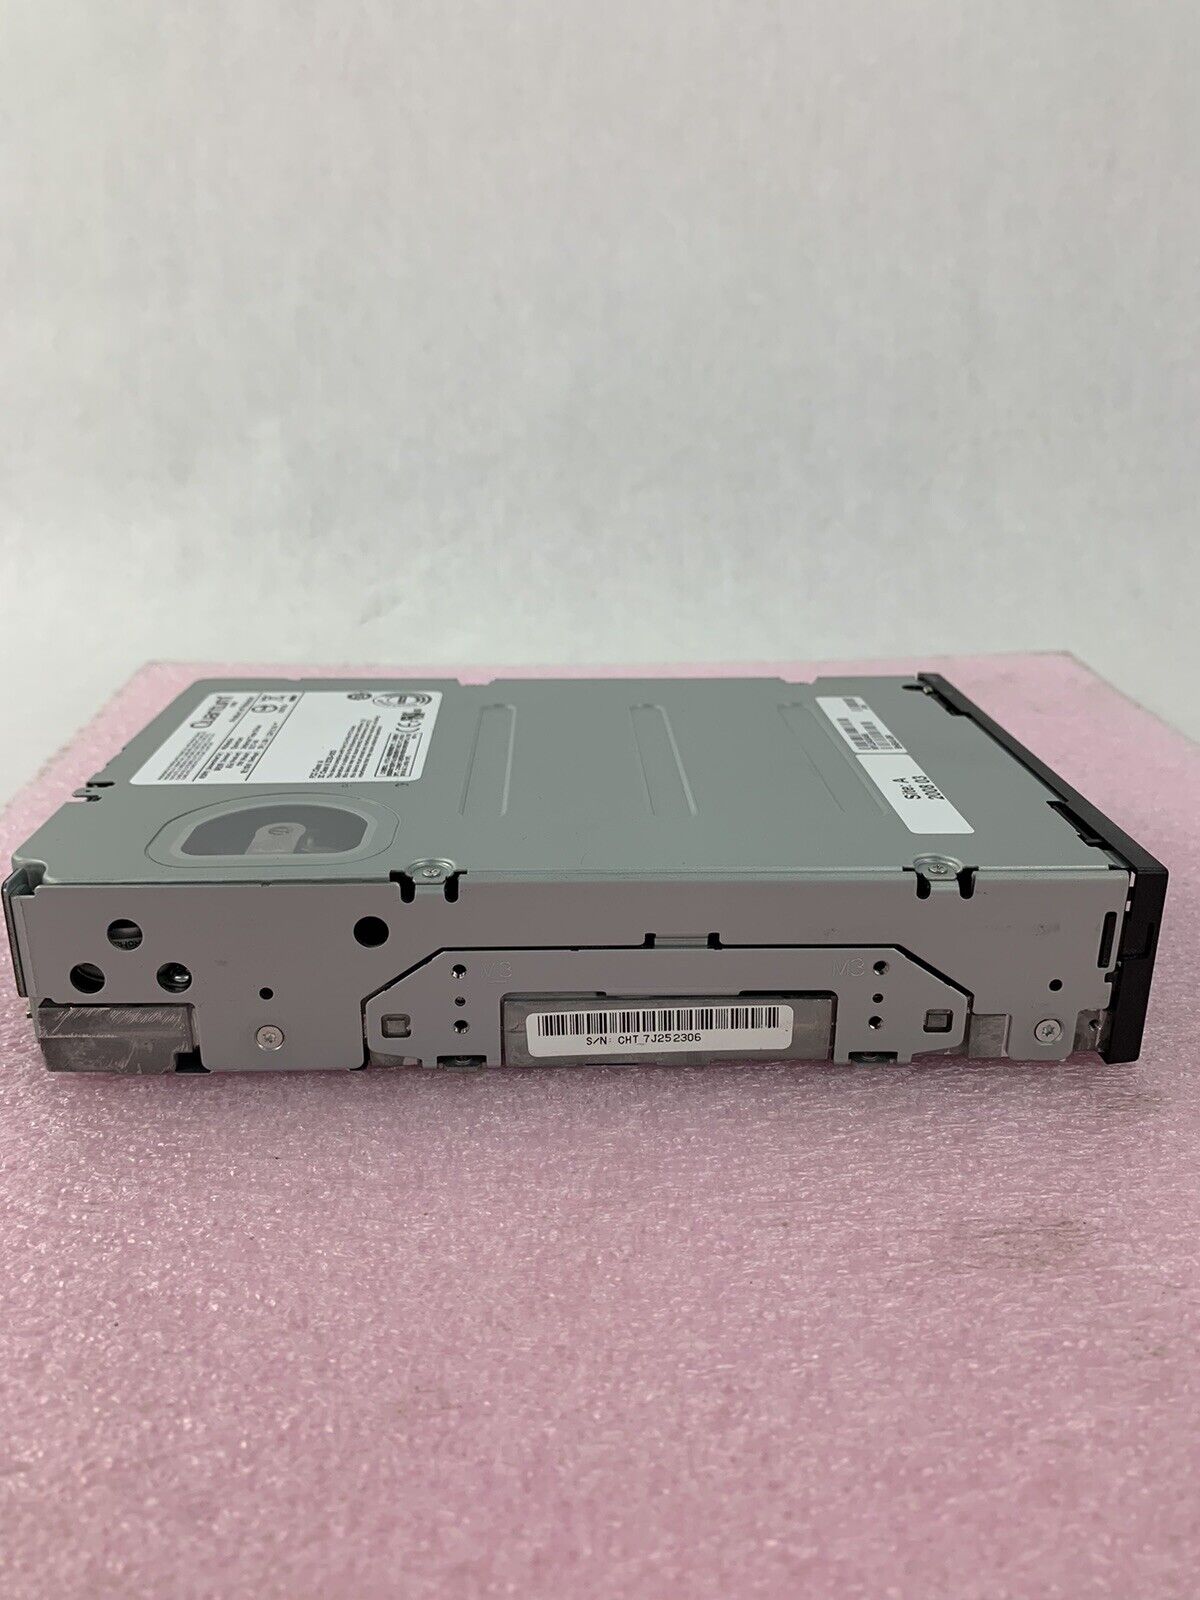 Quantum DLT-V4e External DLT Tape Drive